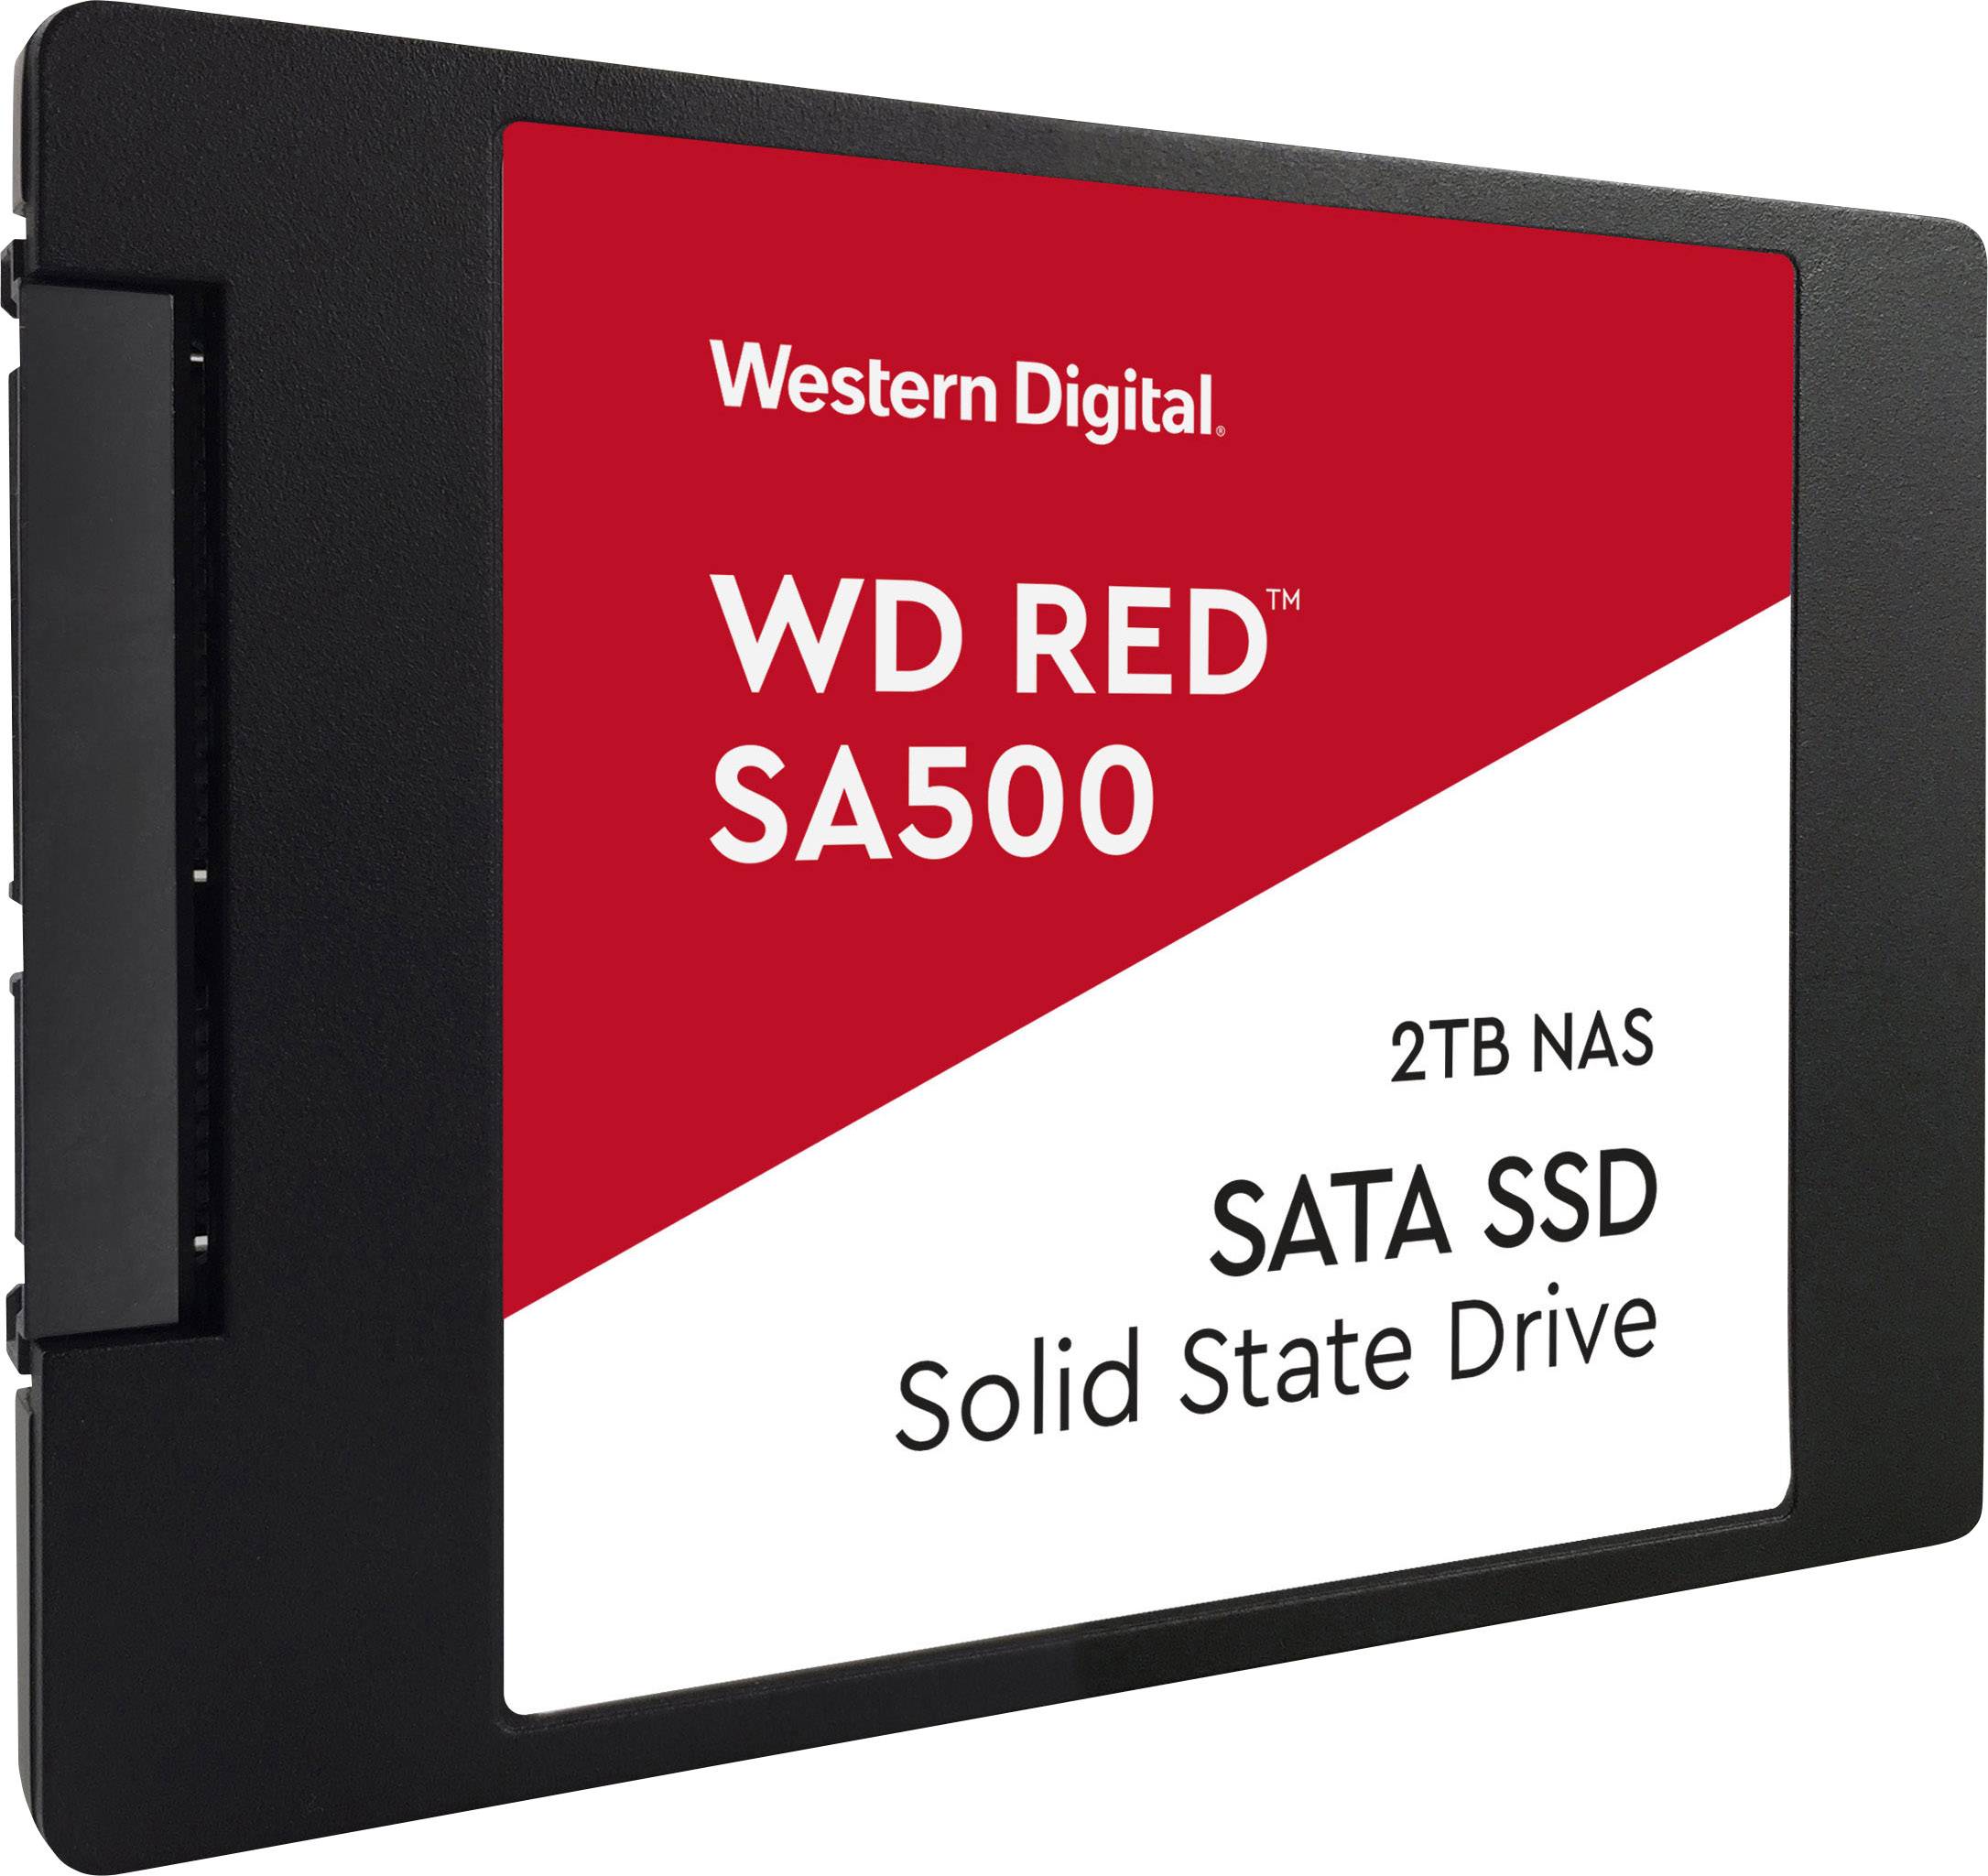 Vaag bespotten paradijs Western Digital WD Red™ SA500 2 TB SSD harde schijf (2.5 inch) SATA 6 Gb/s  WDS200T1R0A kopen ? Conrad Electronic